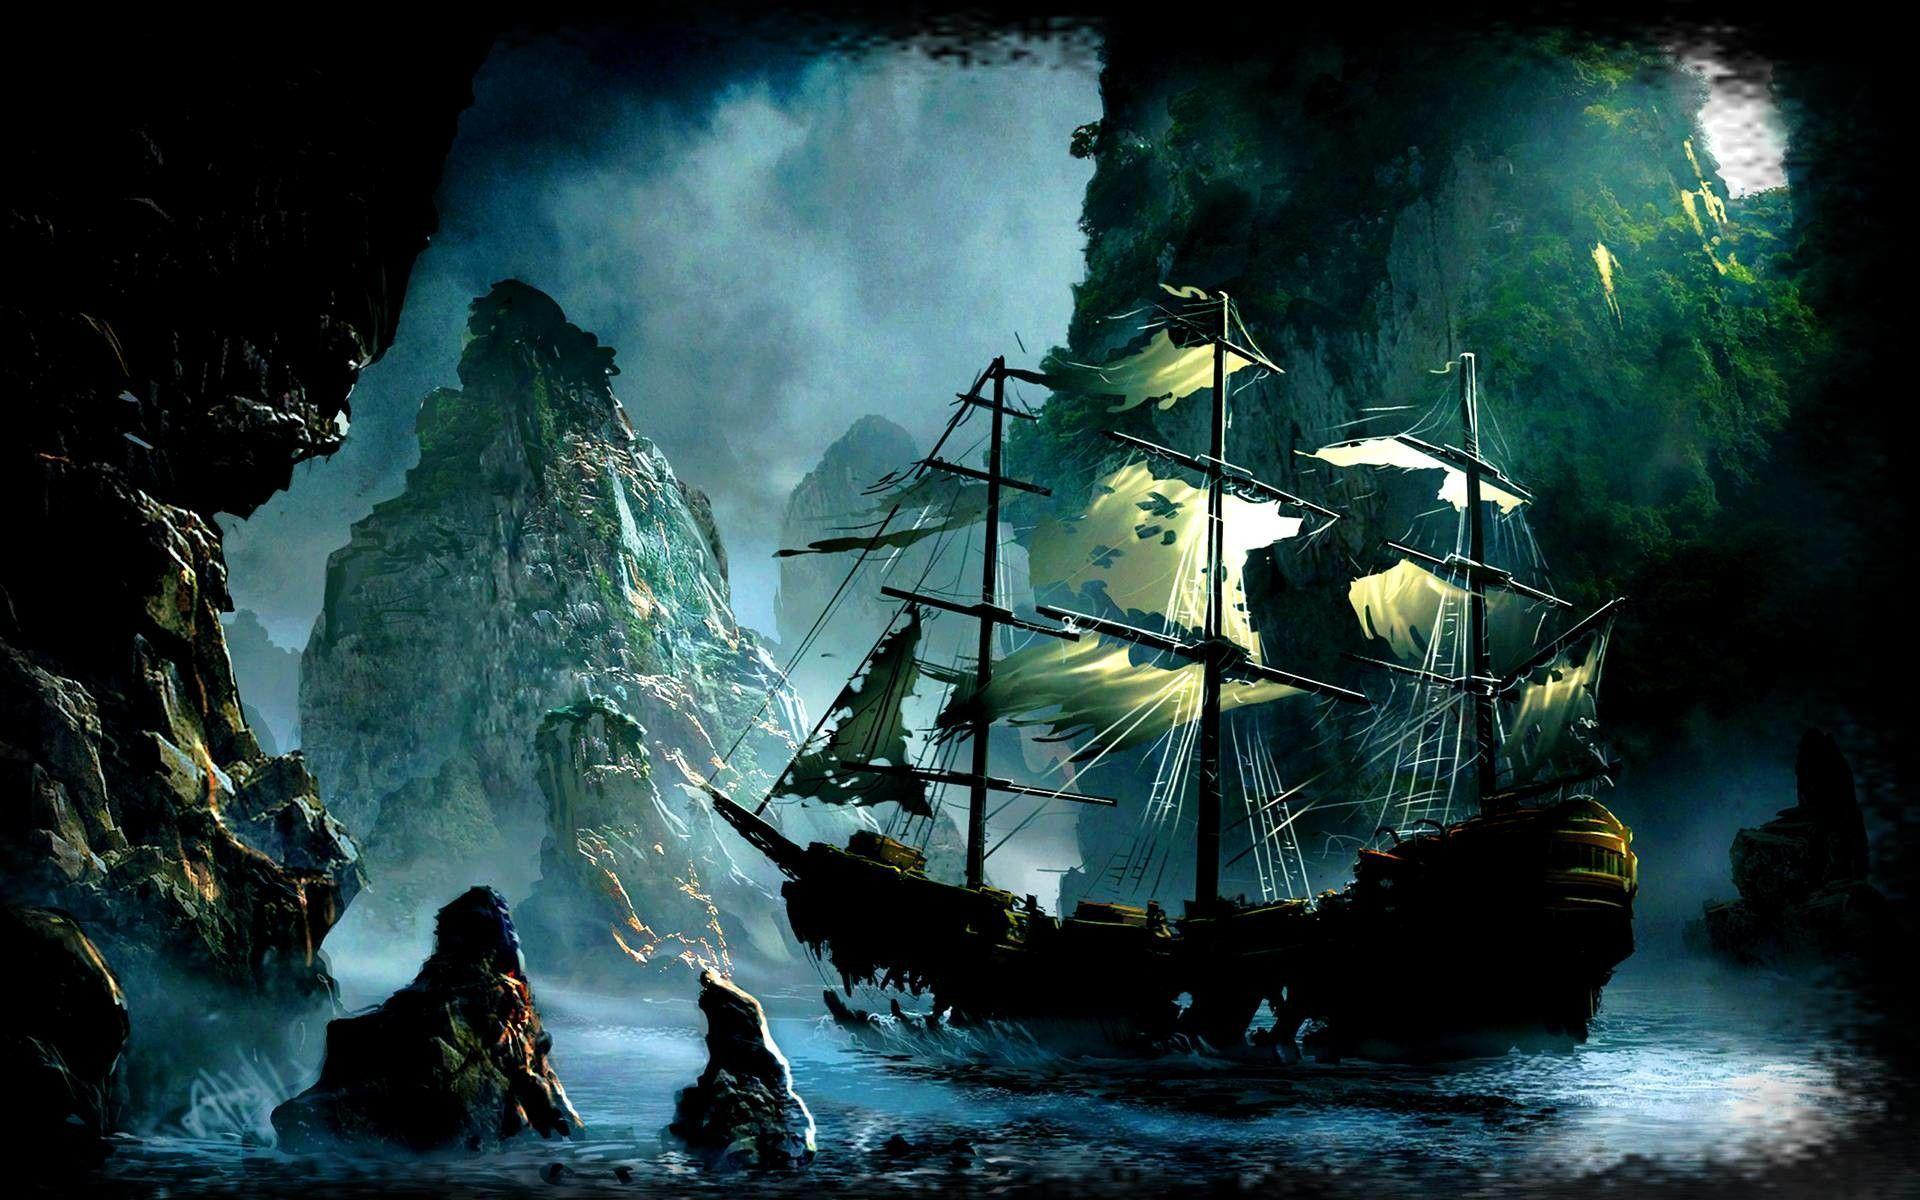 The Nature of a Pirate by A.M. Dellamonica